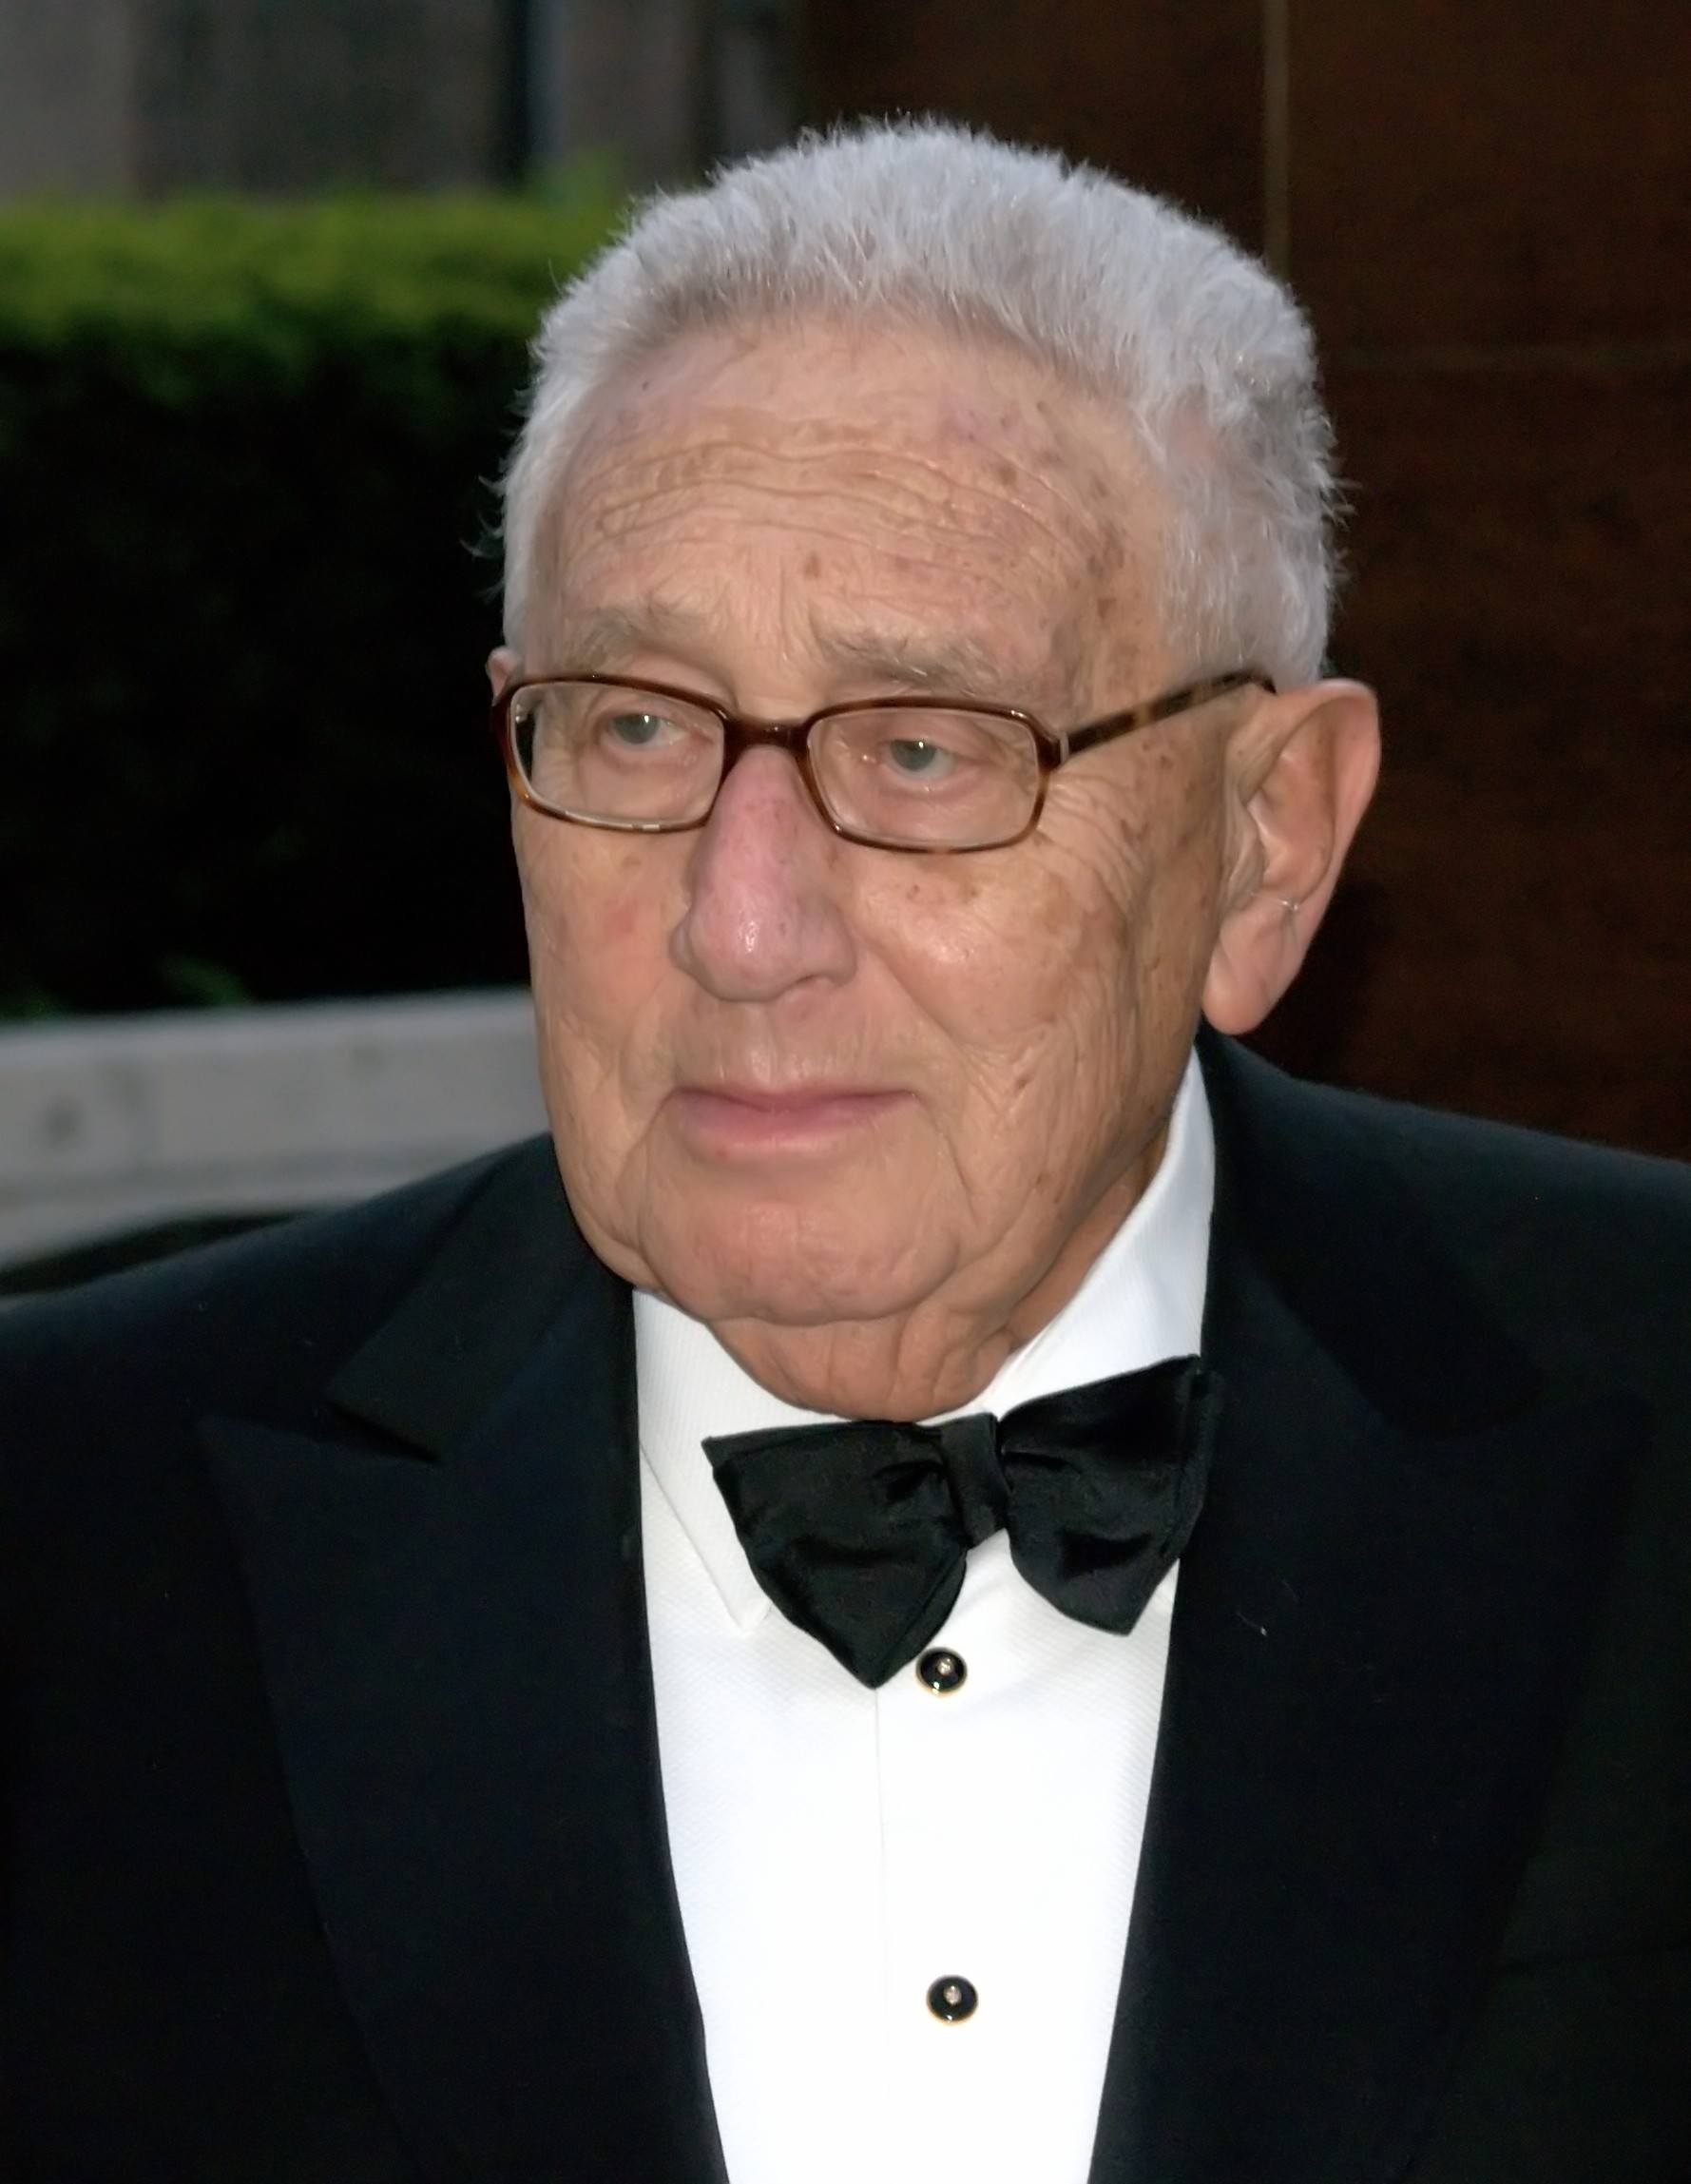 Henry-Kissinger-Metropolitan-Opera-New-York-2009-Source-Wikipedia-Photo-Shankbone-CC-BY-3_0.jpg